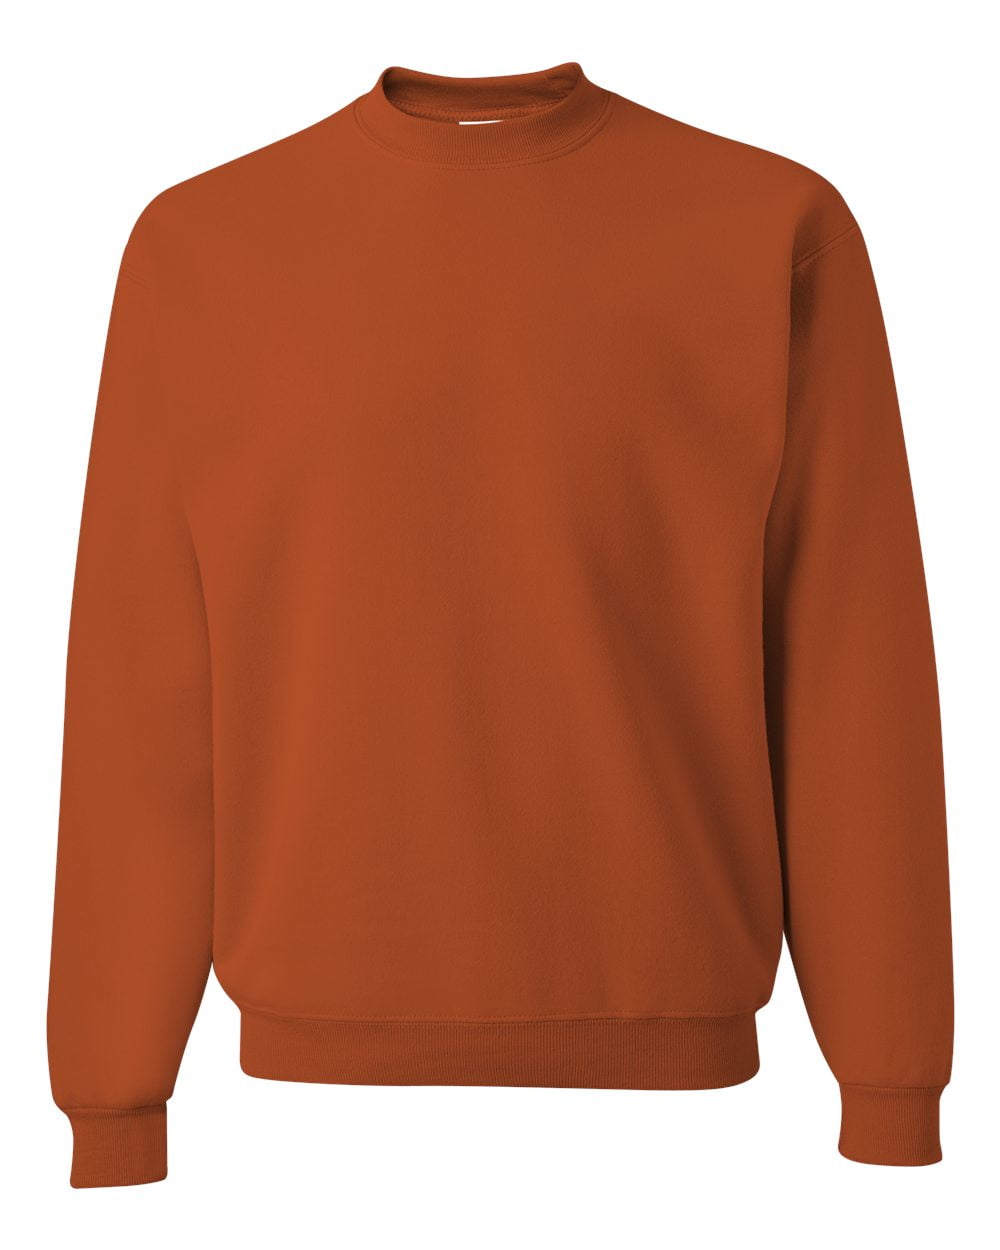 JERZEES - NuBlend Crewneck Sweatshirt - 562MR - Burnt Orange - Size: L 